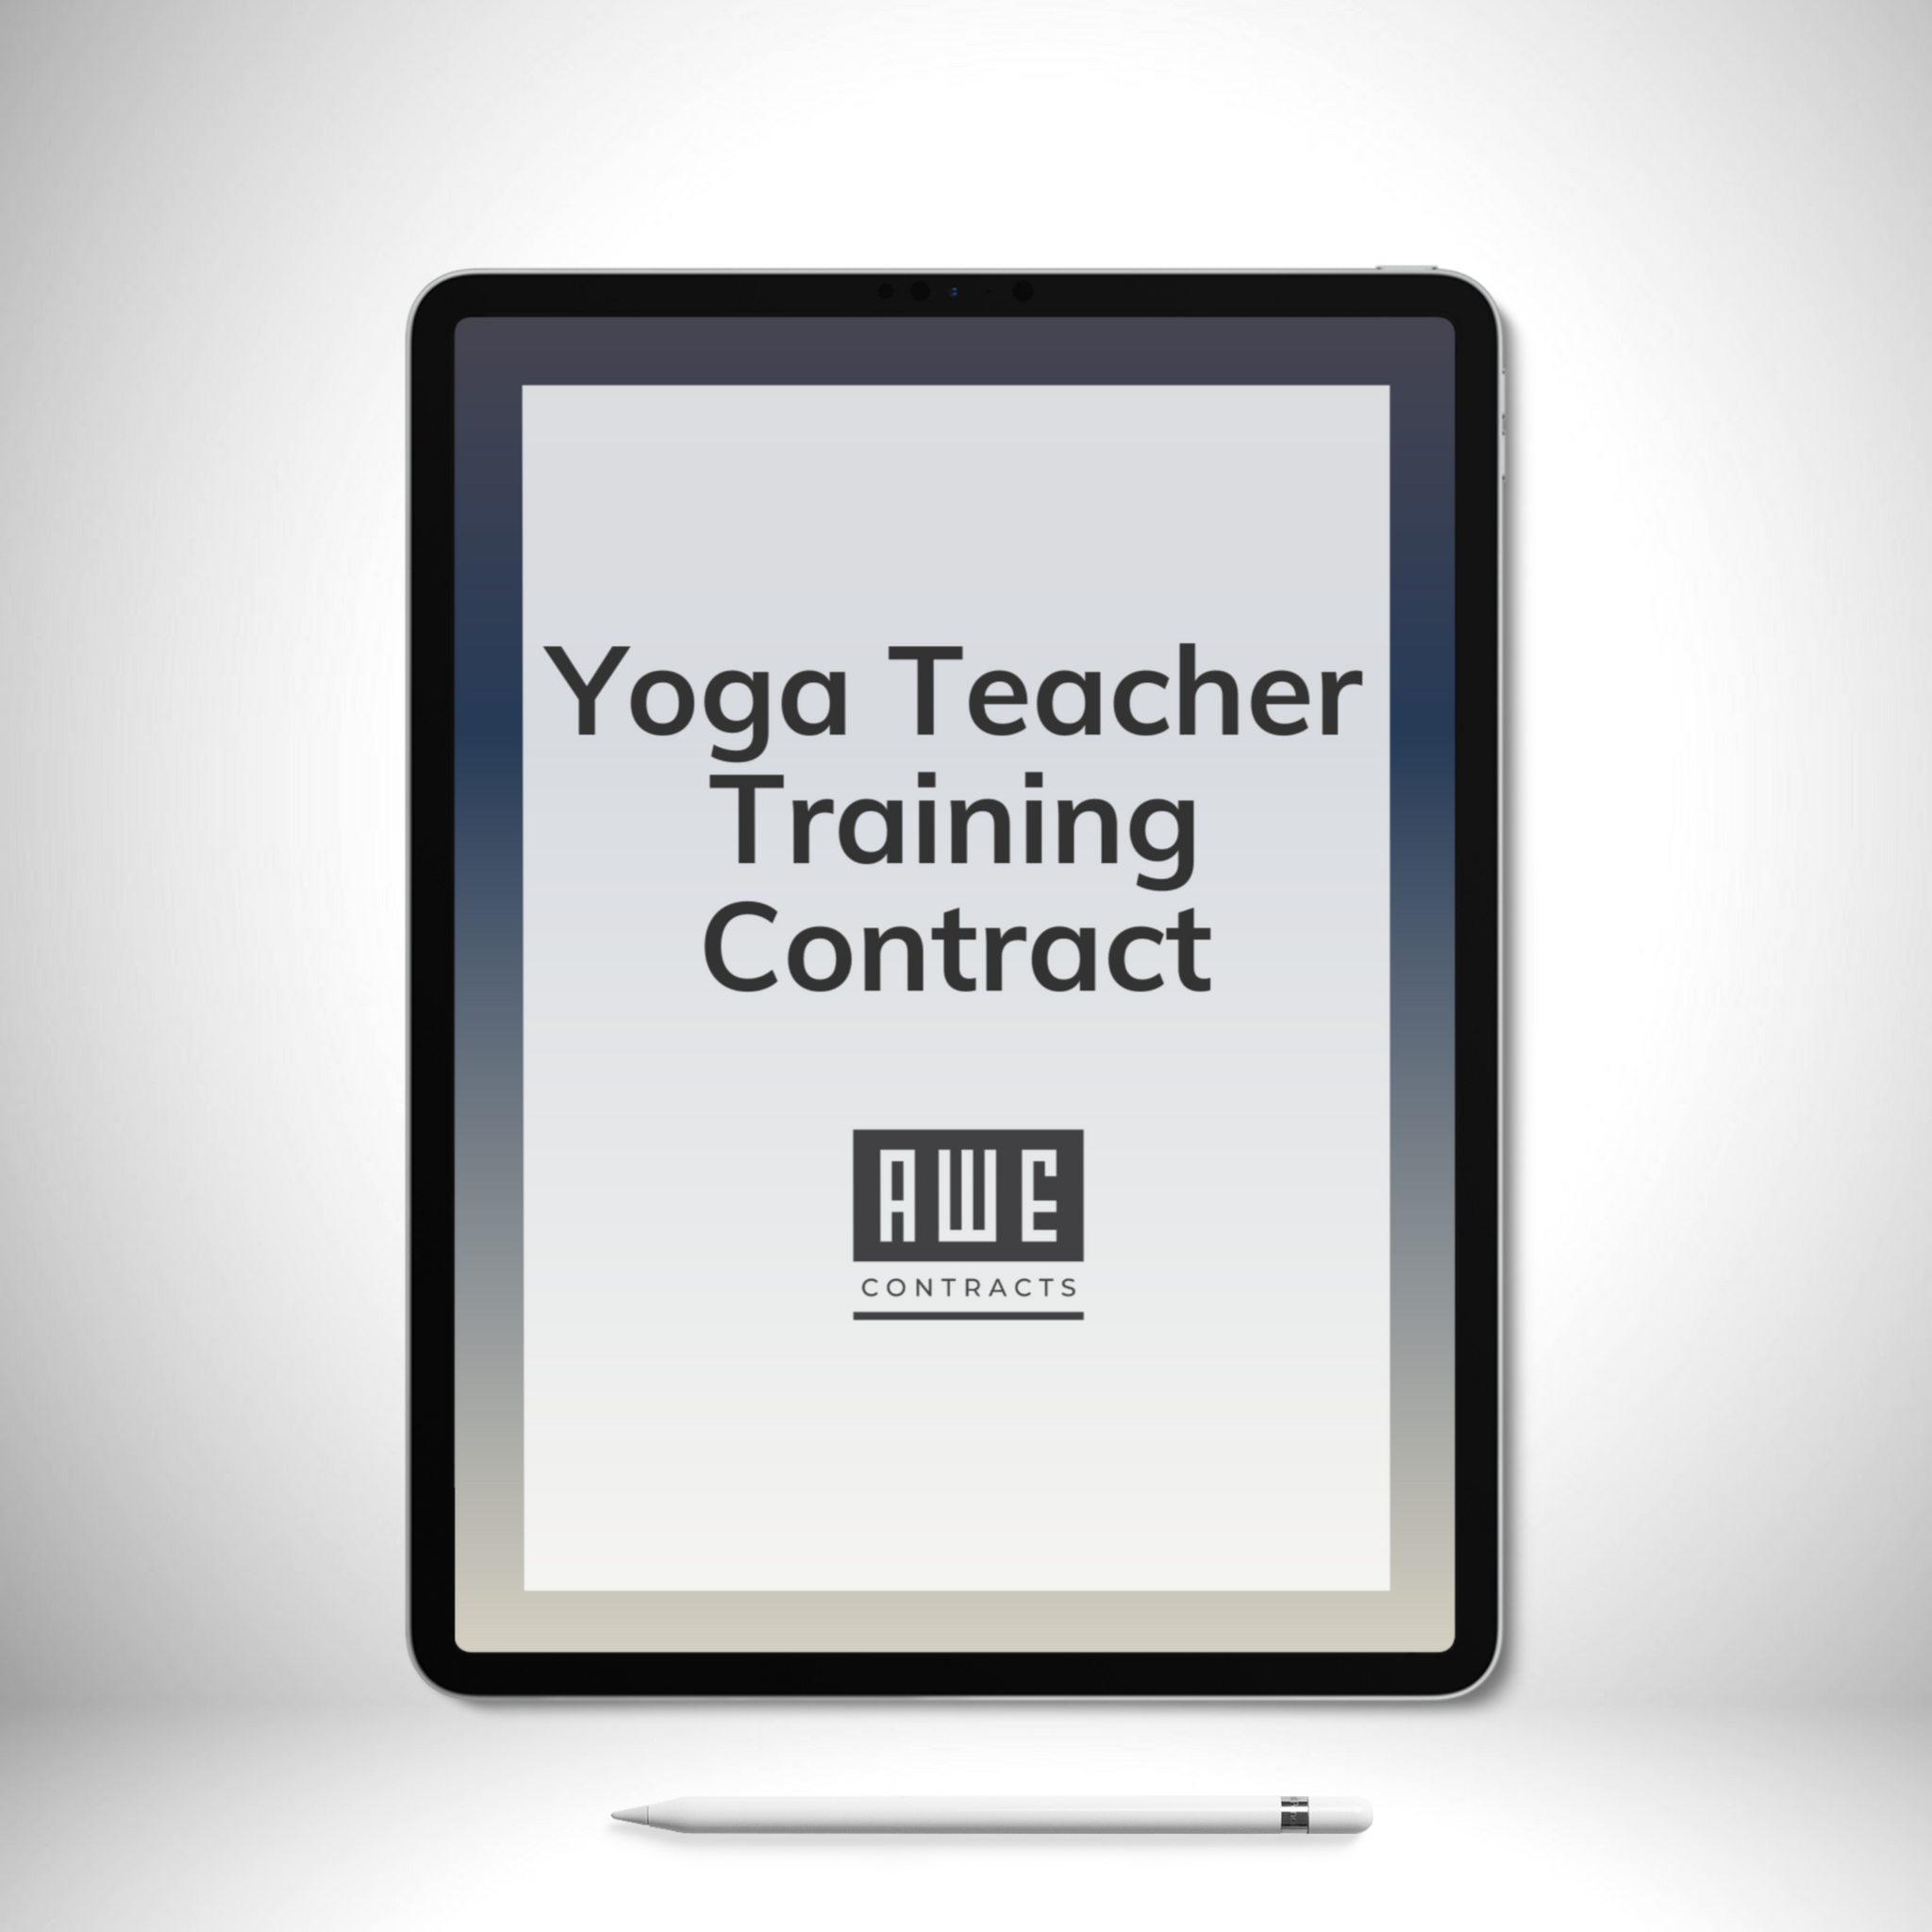 Yoga Teacher Training Contract